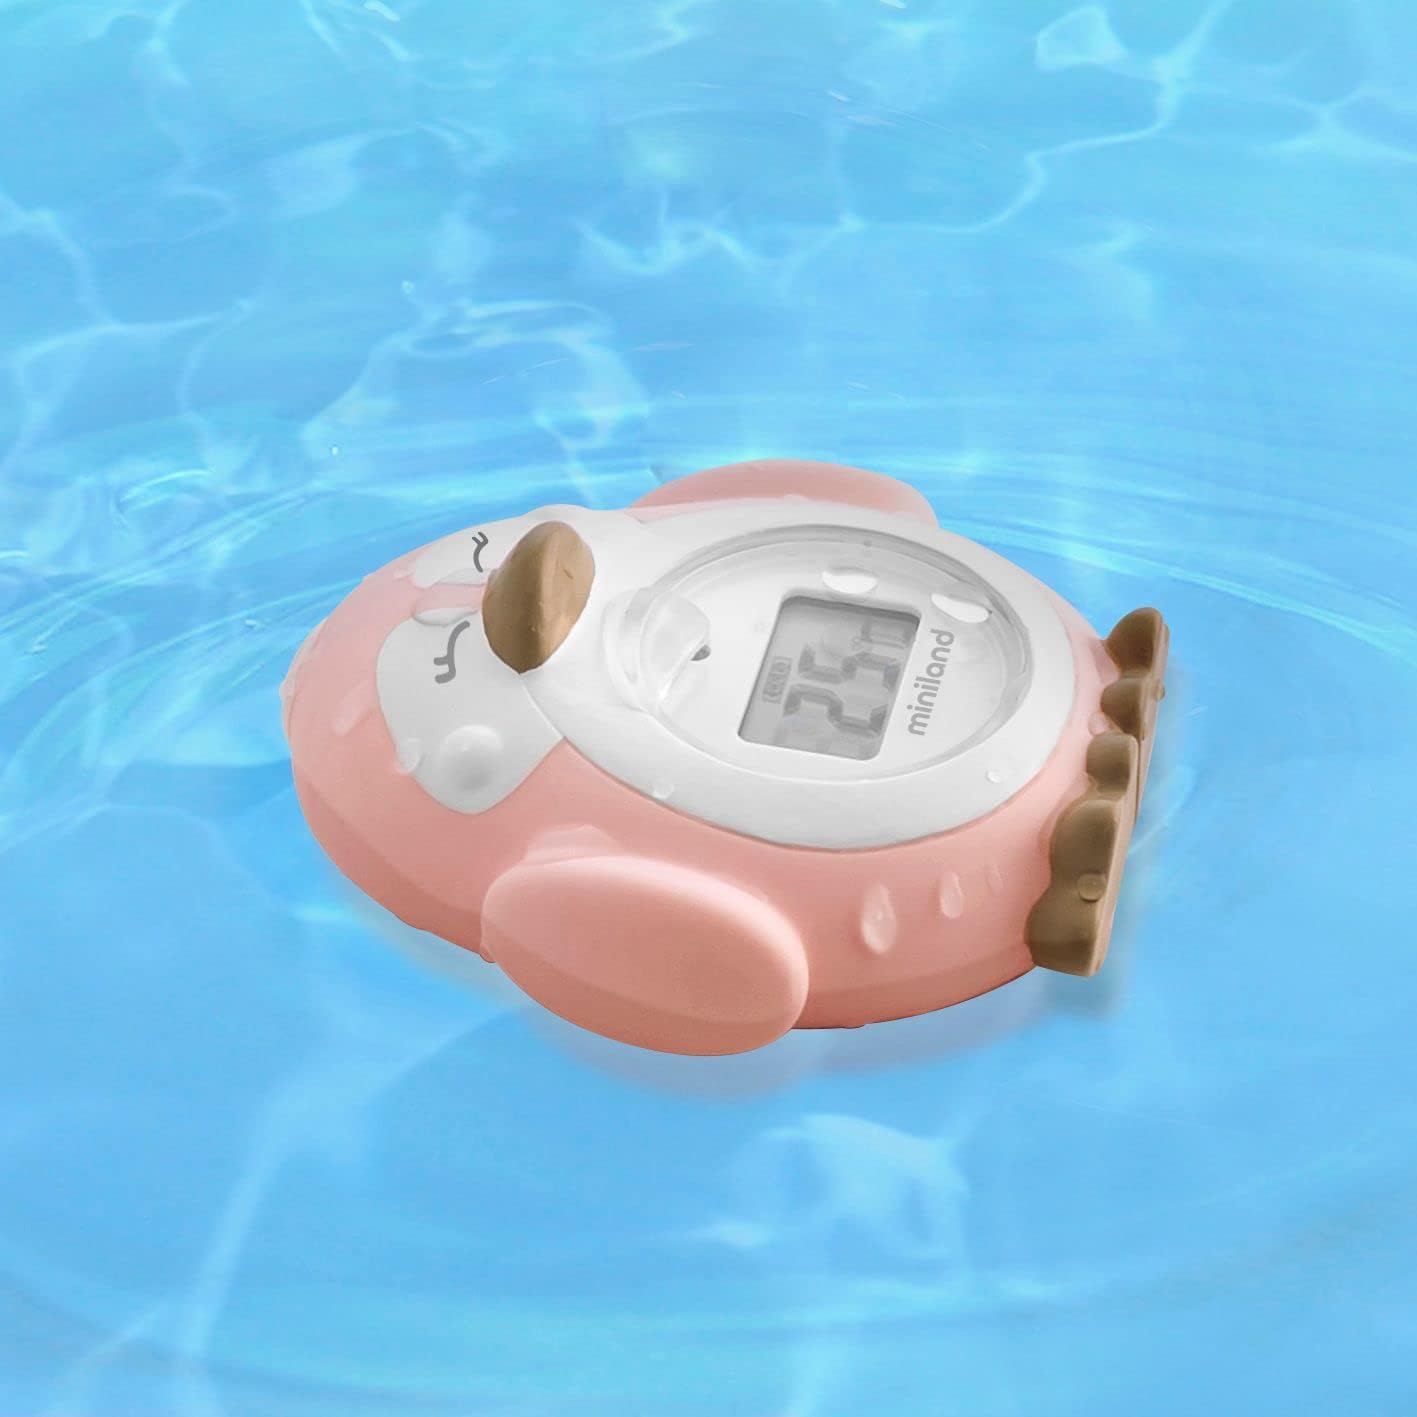 Miniland Thermokit - Set de 3 termómetros digitales de bebé, color rosa.